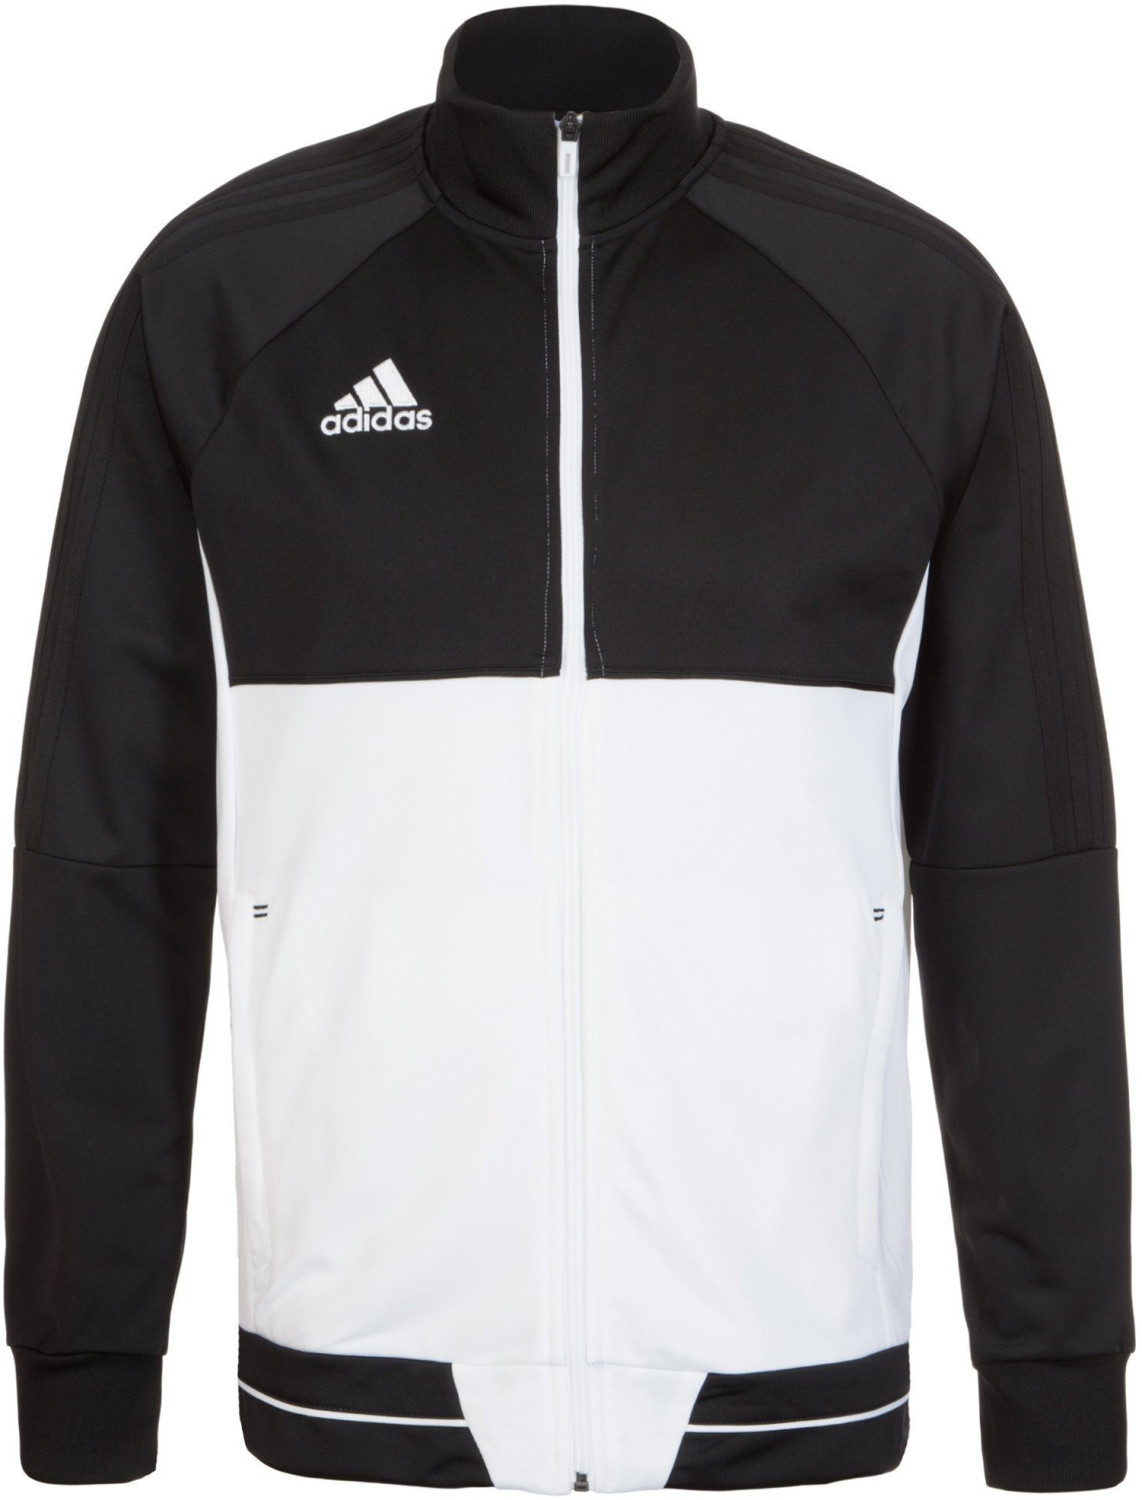 Buy Adidas Tiro 17 Training Jacket Men black/white from £14.04 (Today ...